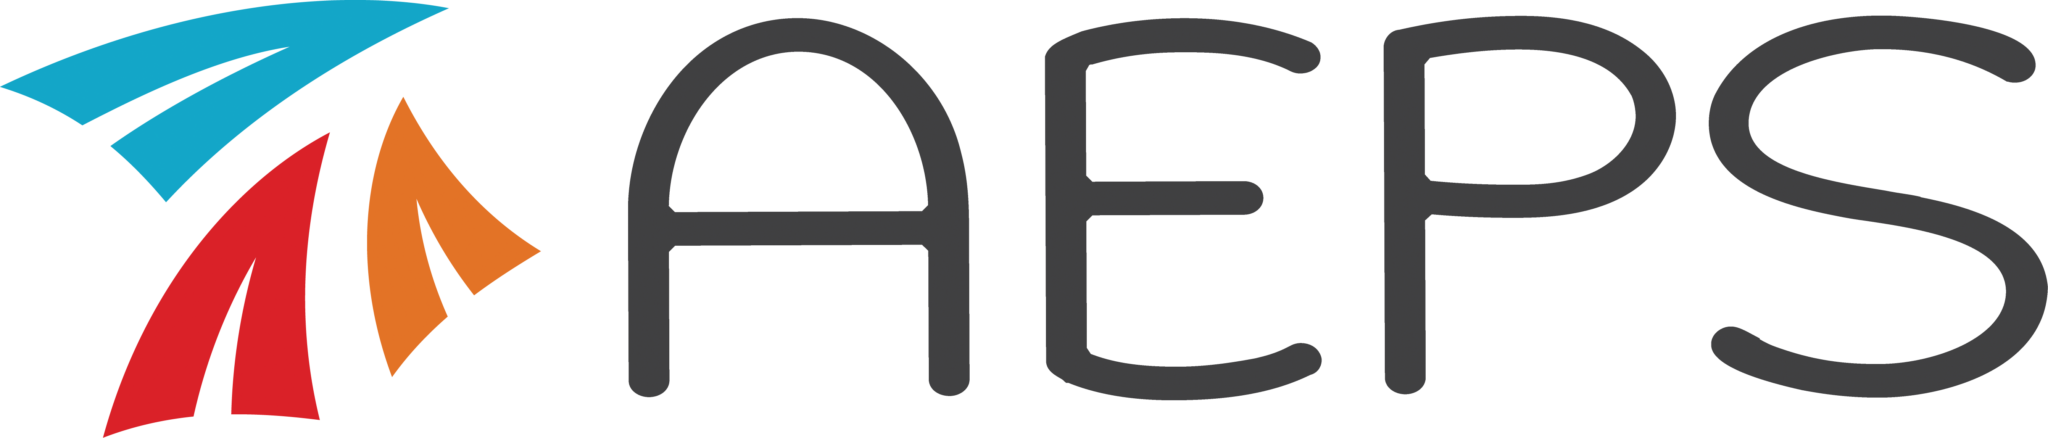 AEPS E-learning platform